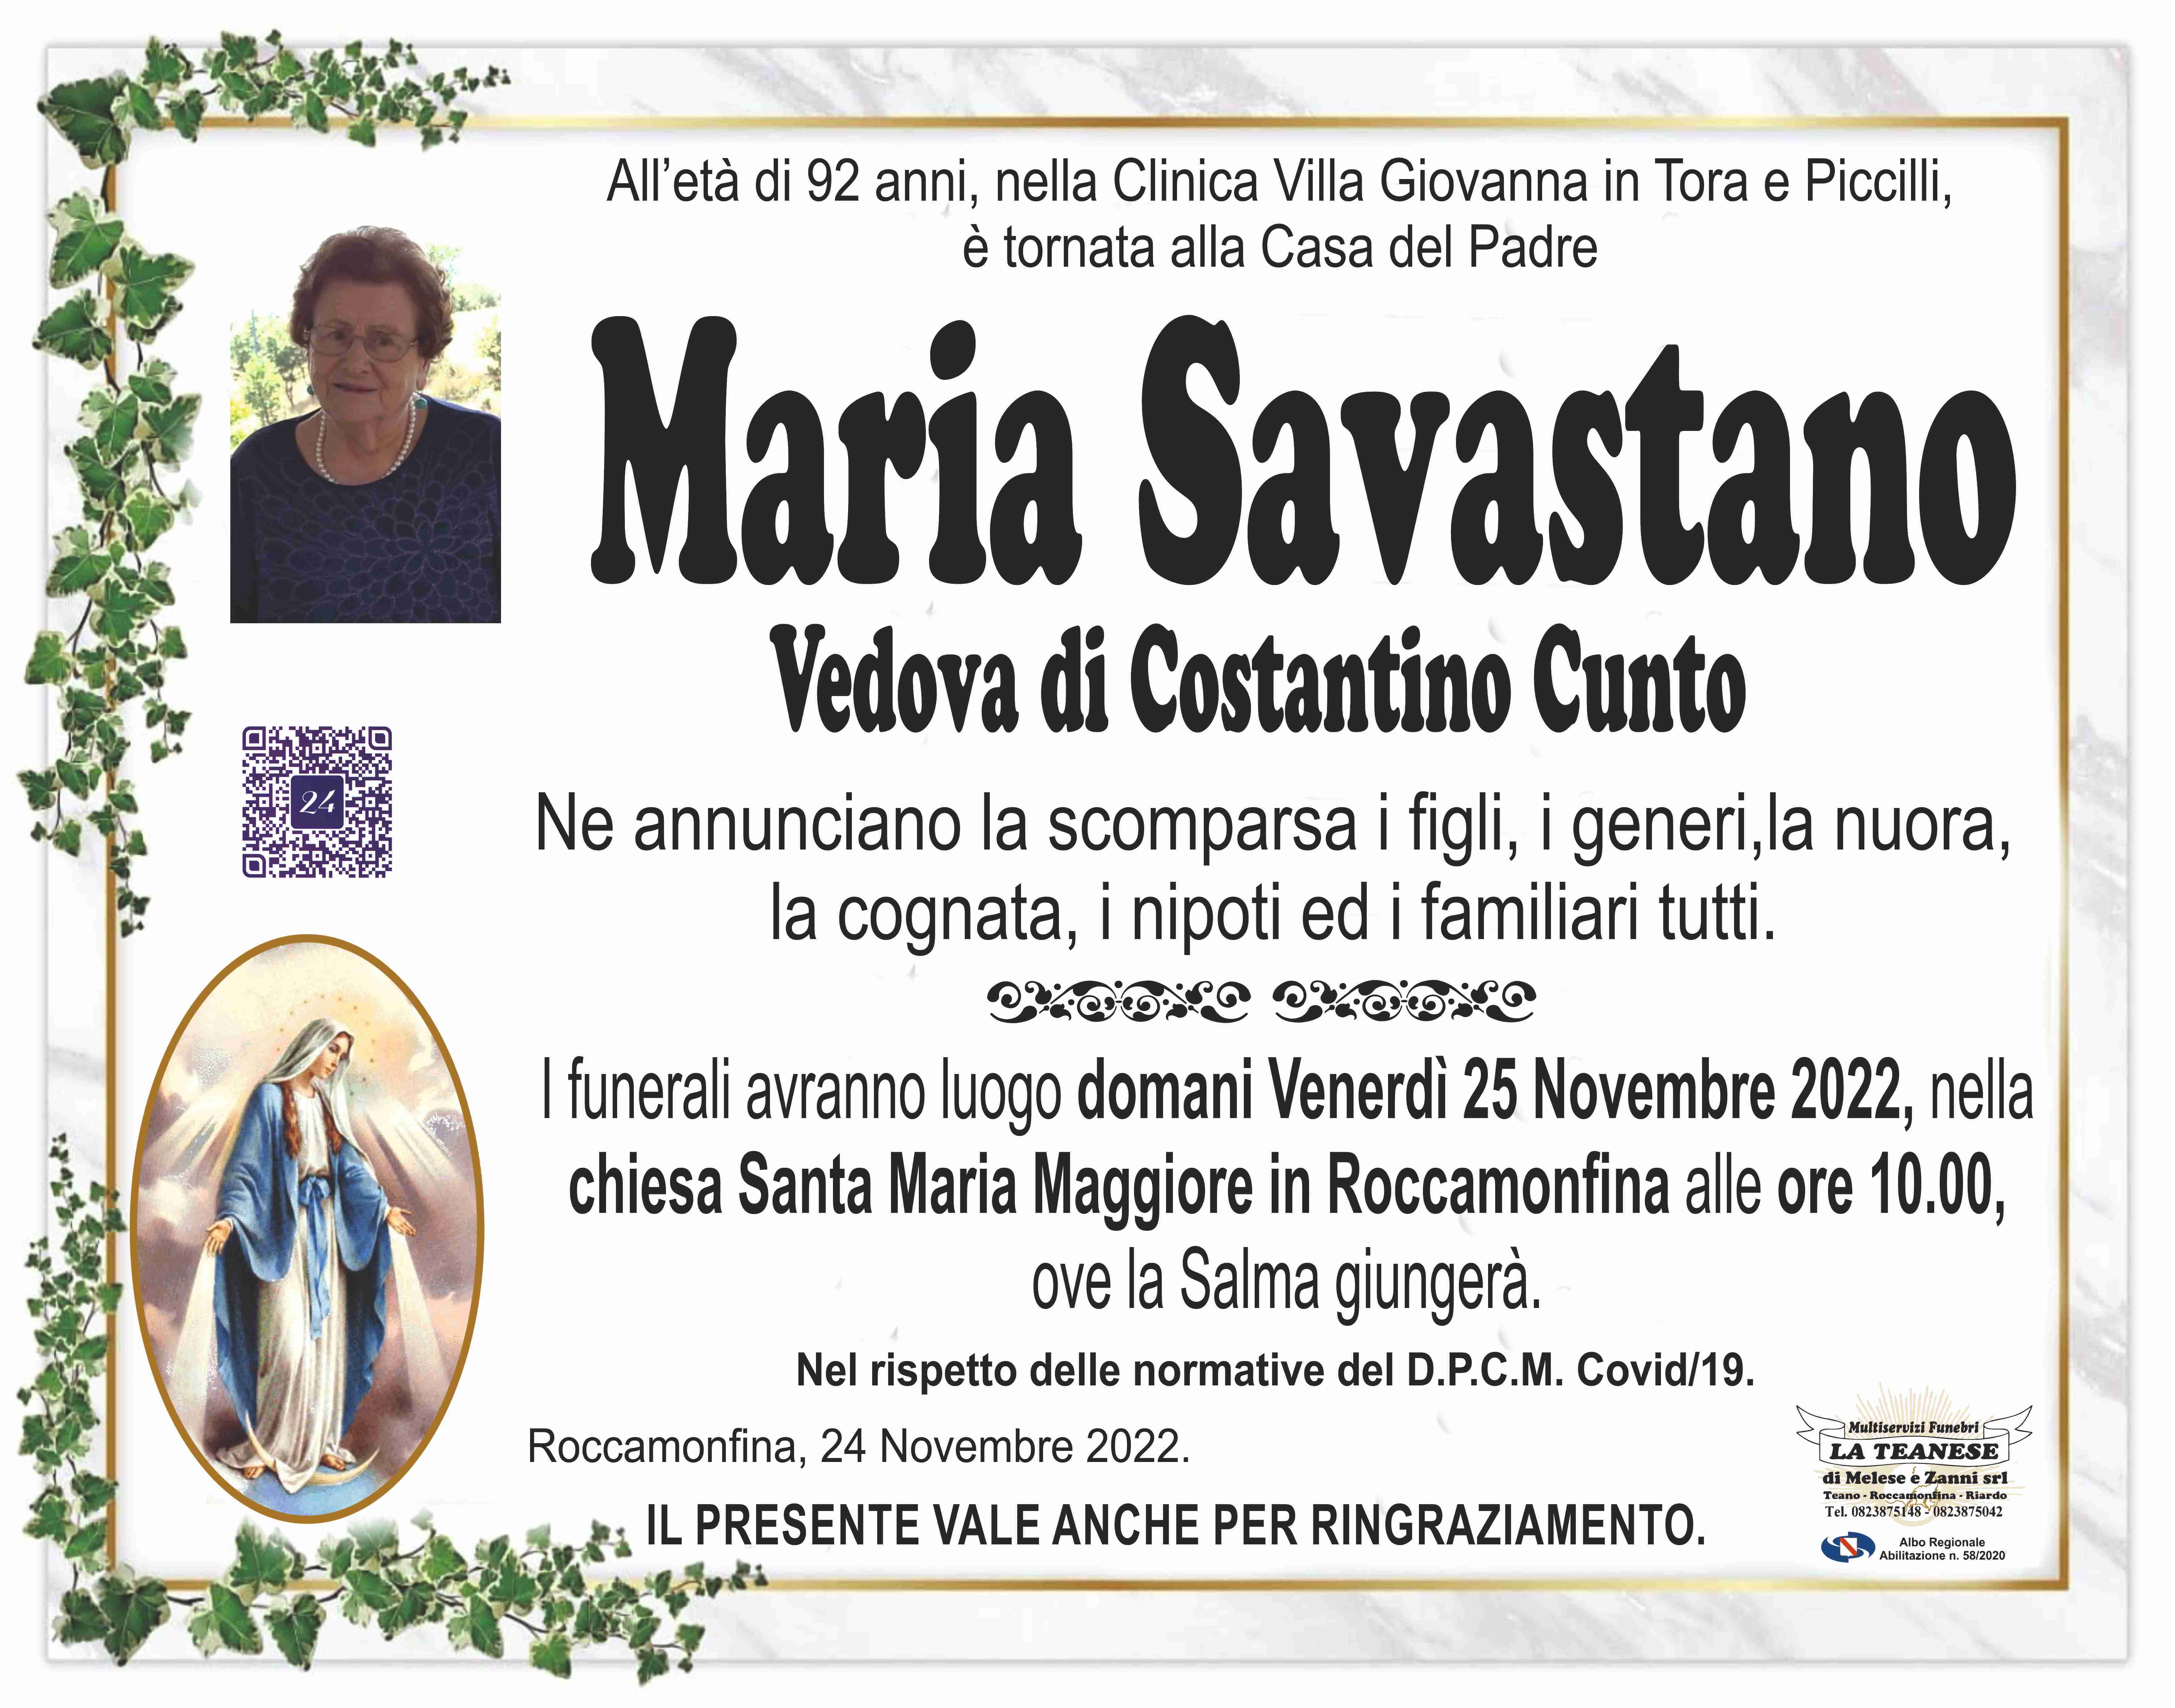 Maria Savastano